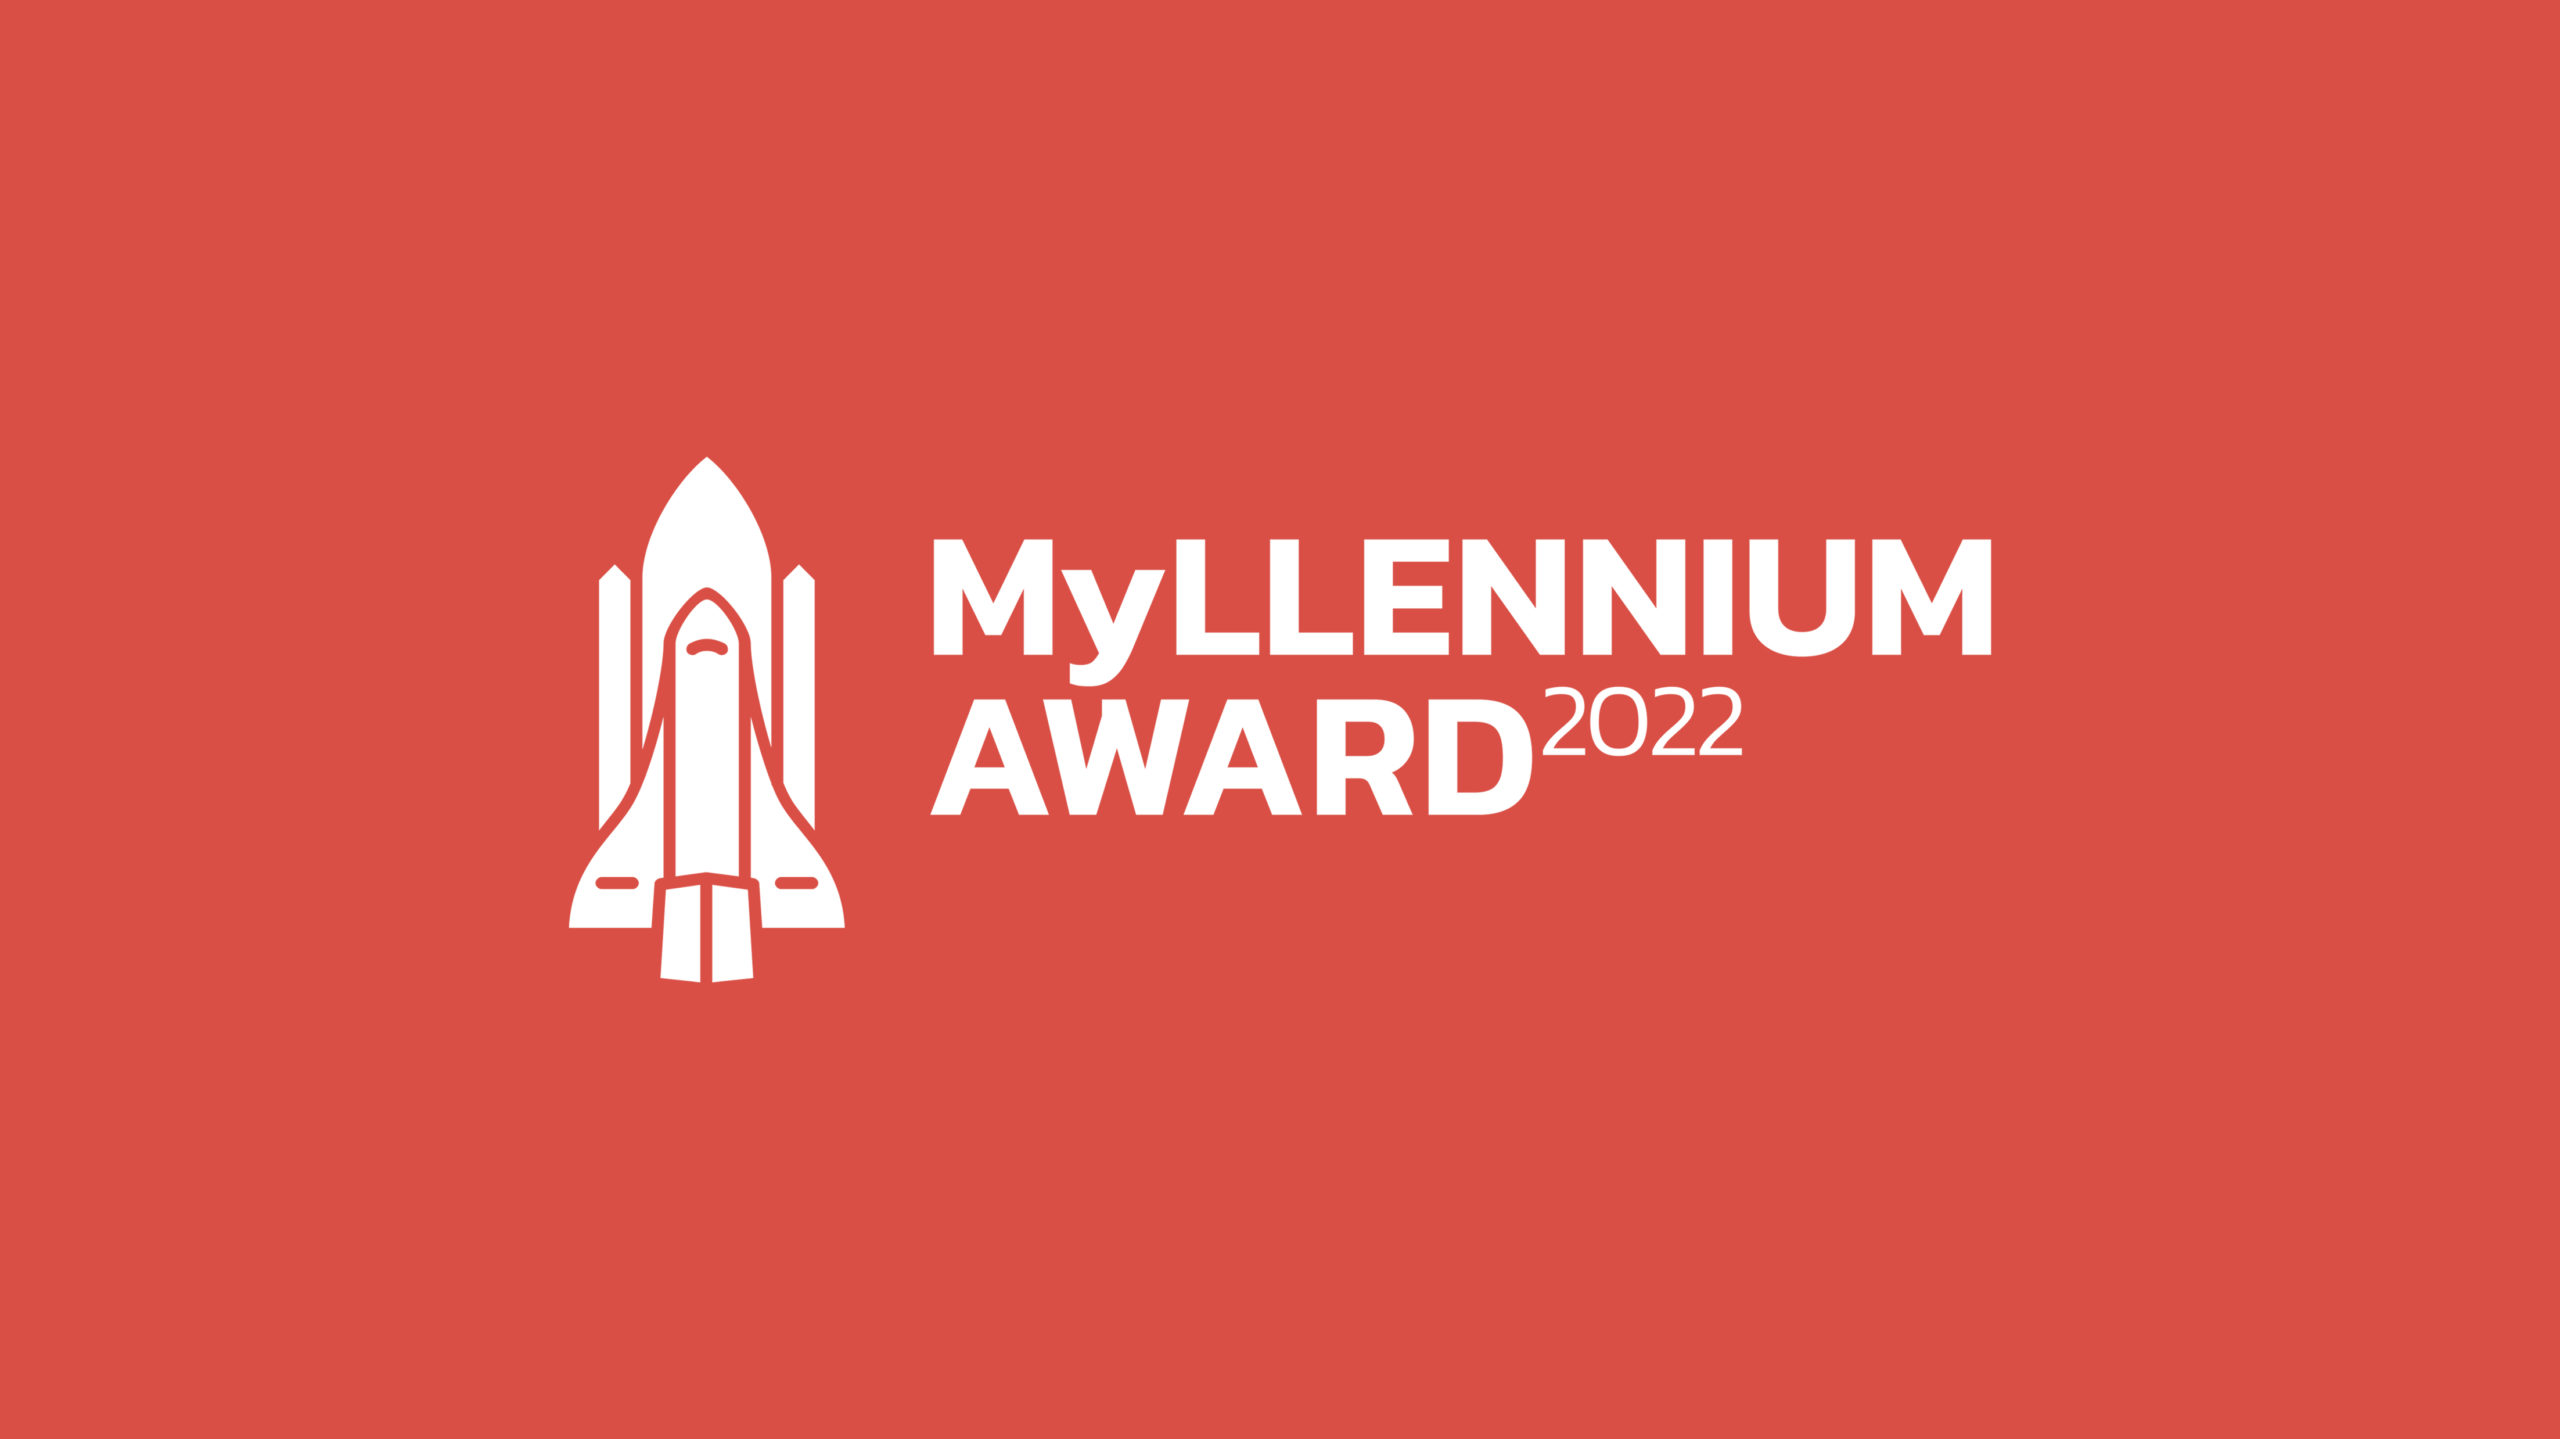 Myllennium Award 2022